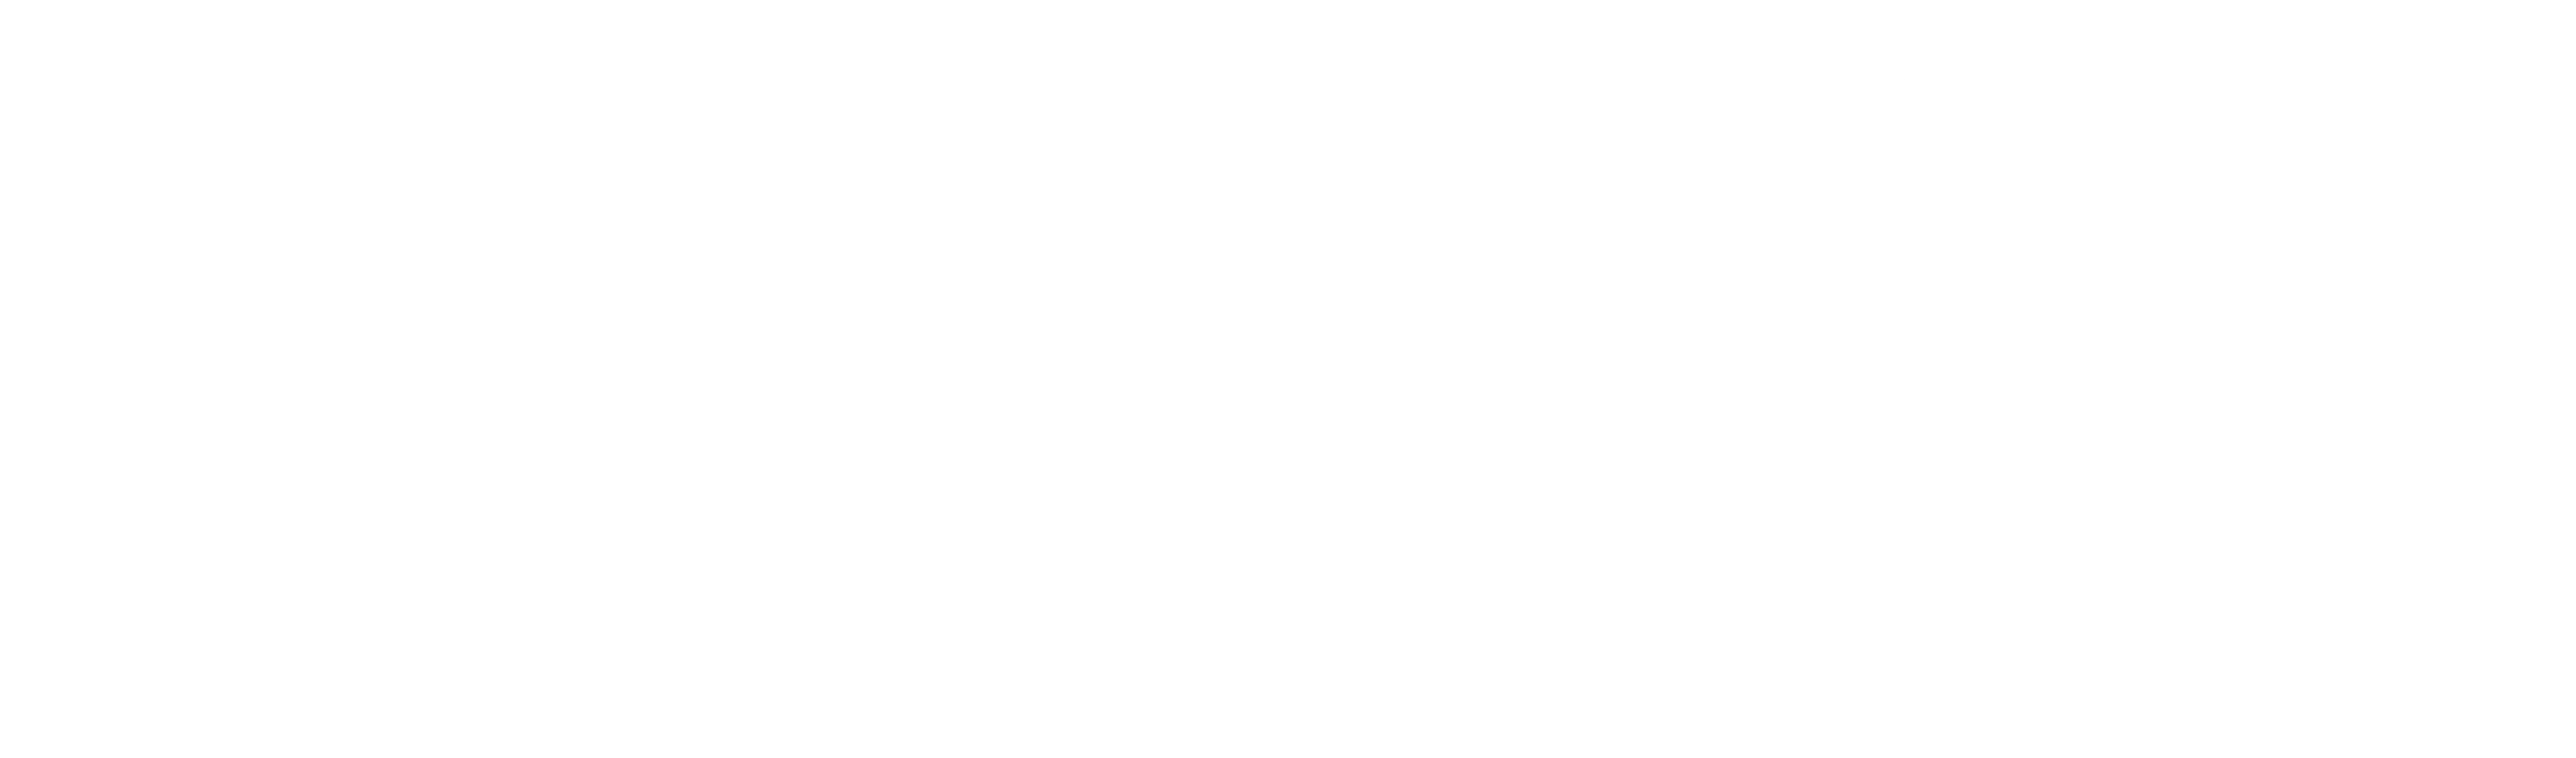 Classic ELITE Chevrolet-logo